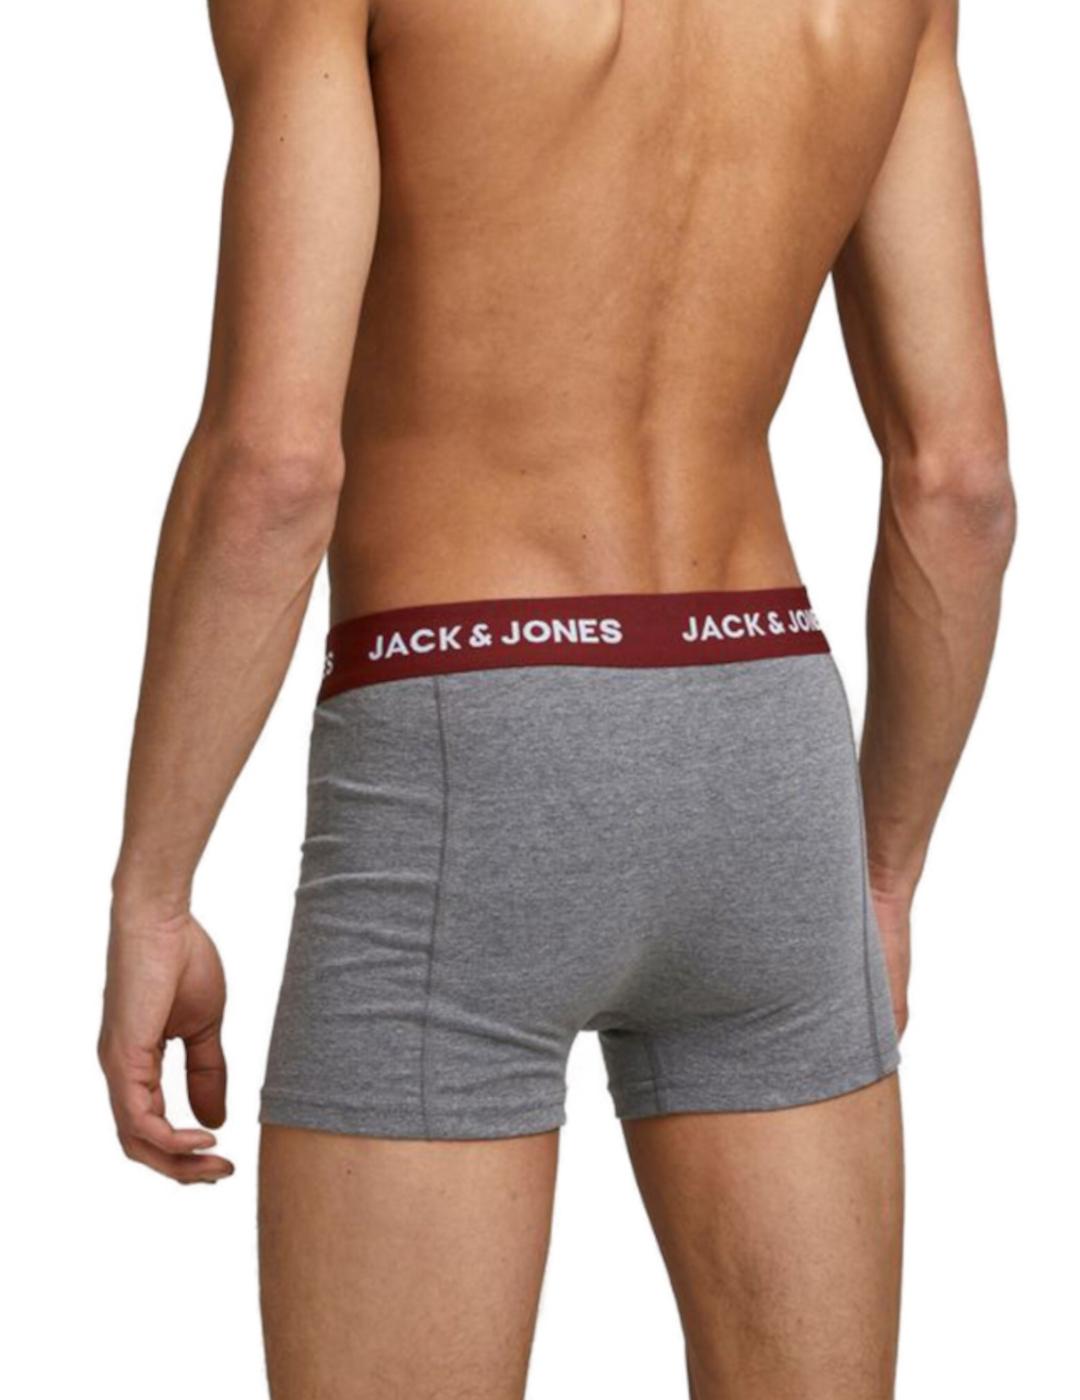 Intimo Jack&Jones Jacred pack3 floreados hombre -z